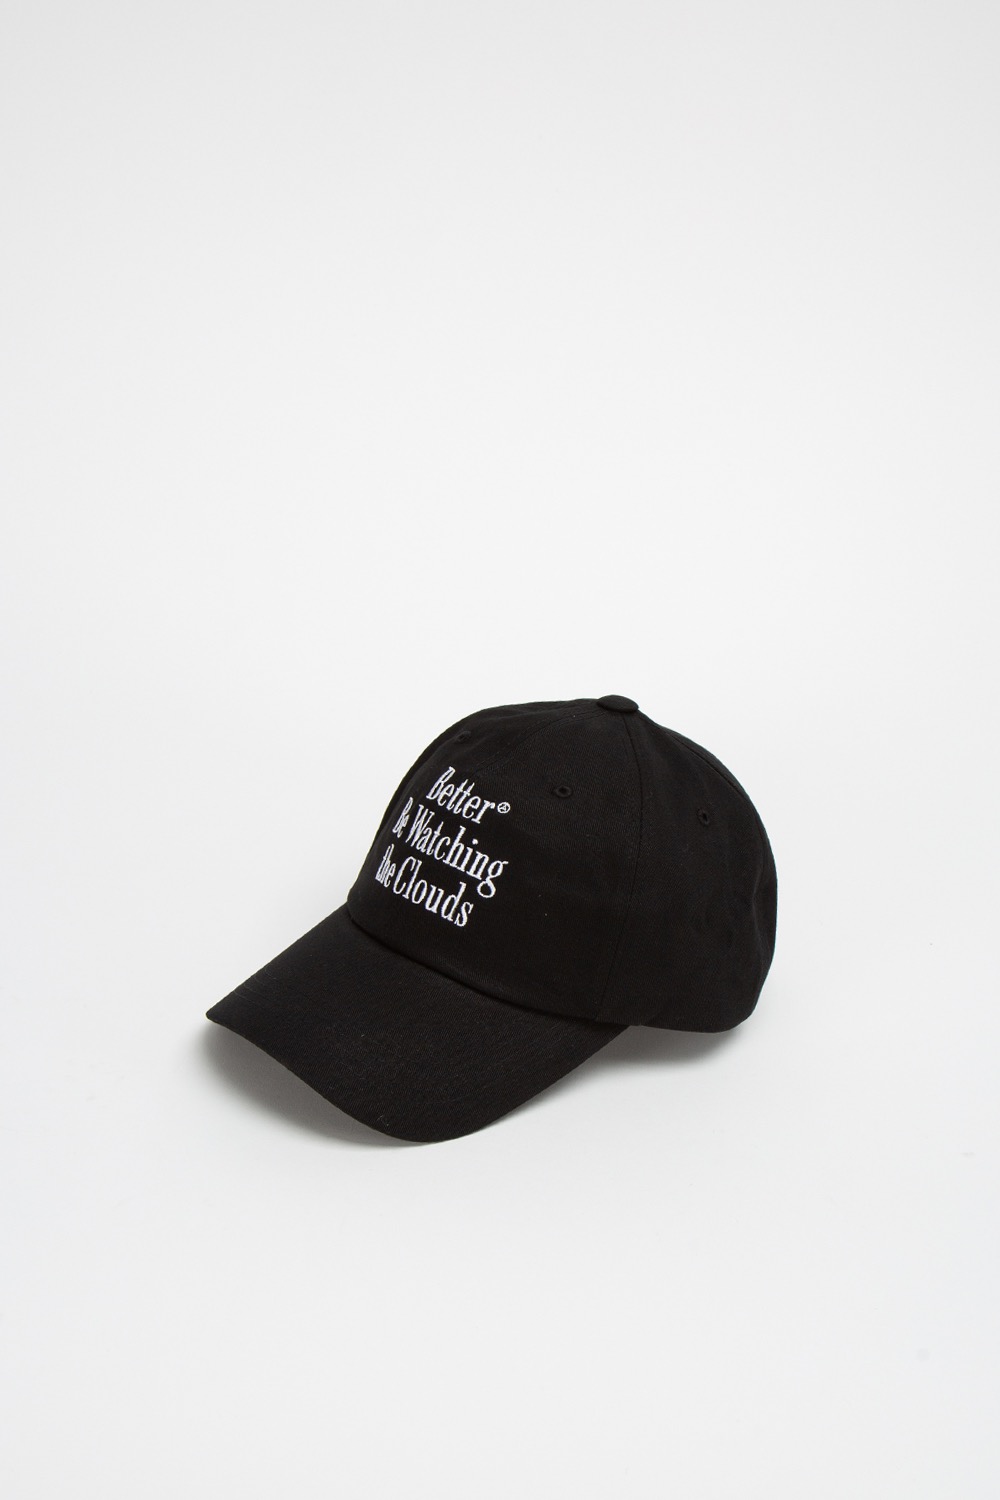 BETTER CAP BLACK